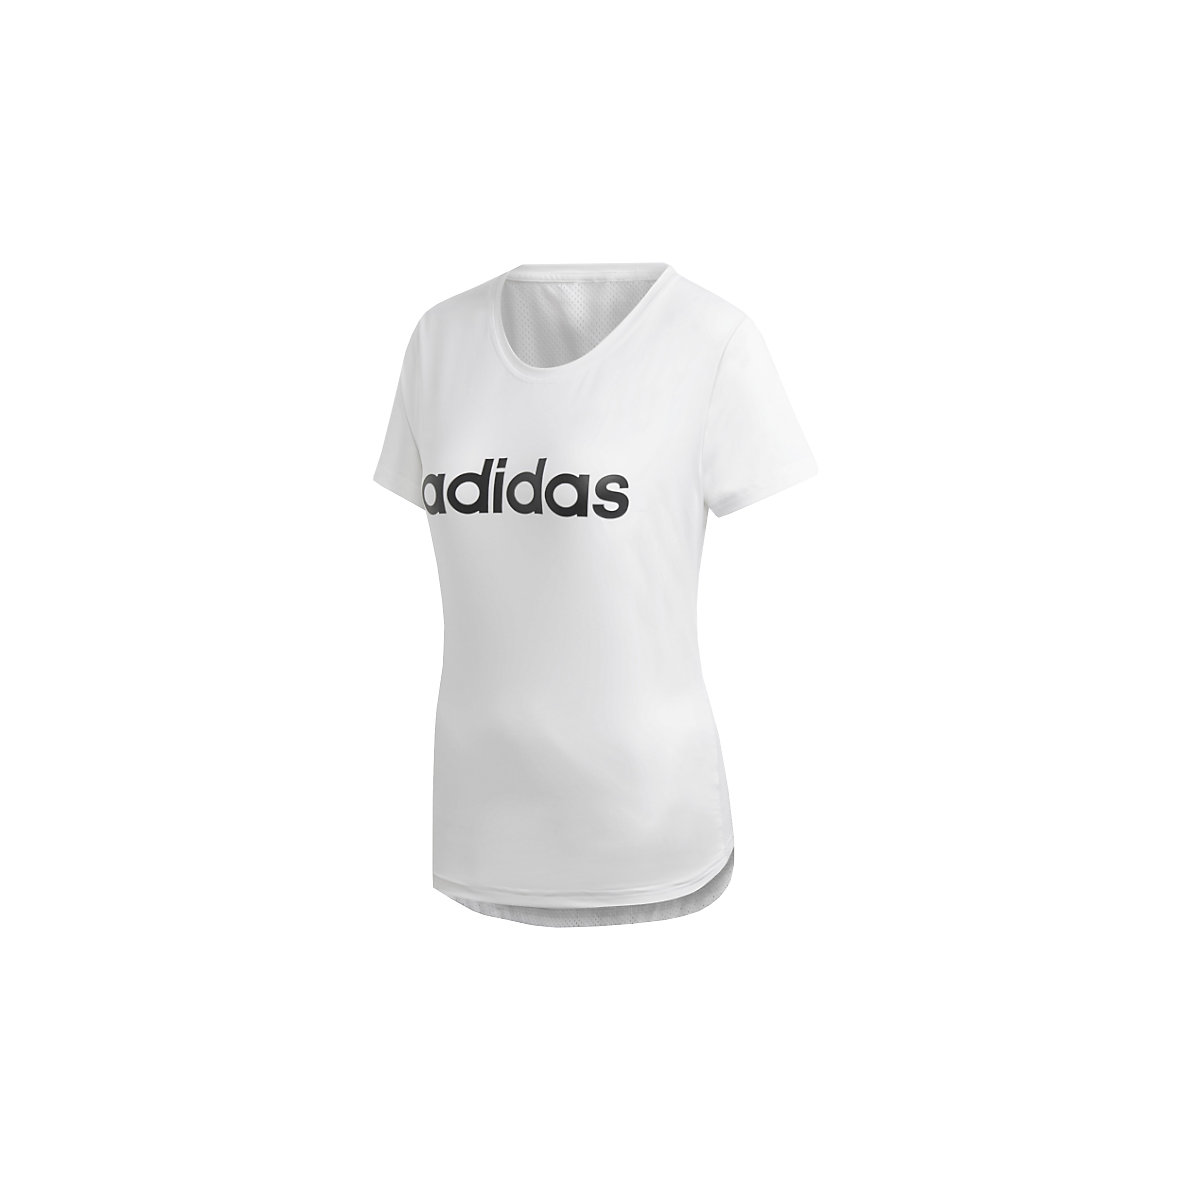 adidas Performance Design 2 Move Logo Tee DU2080 T-Shirts weiß